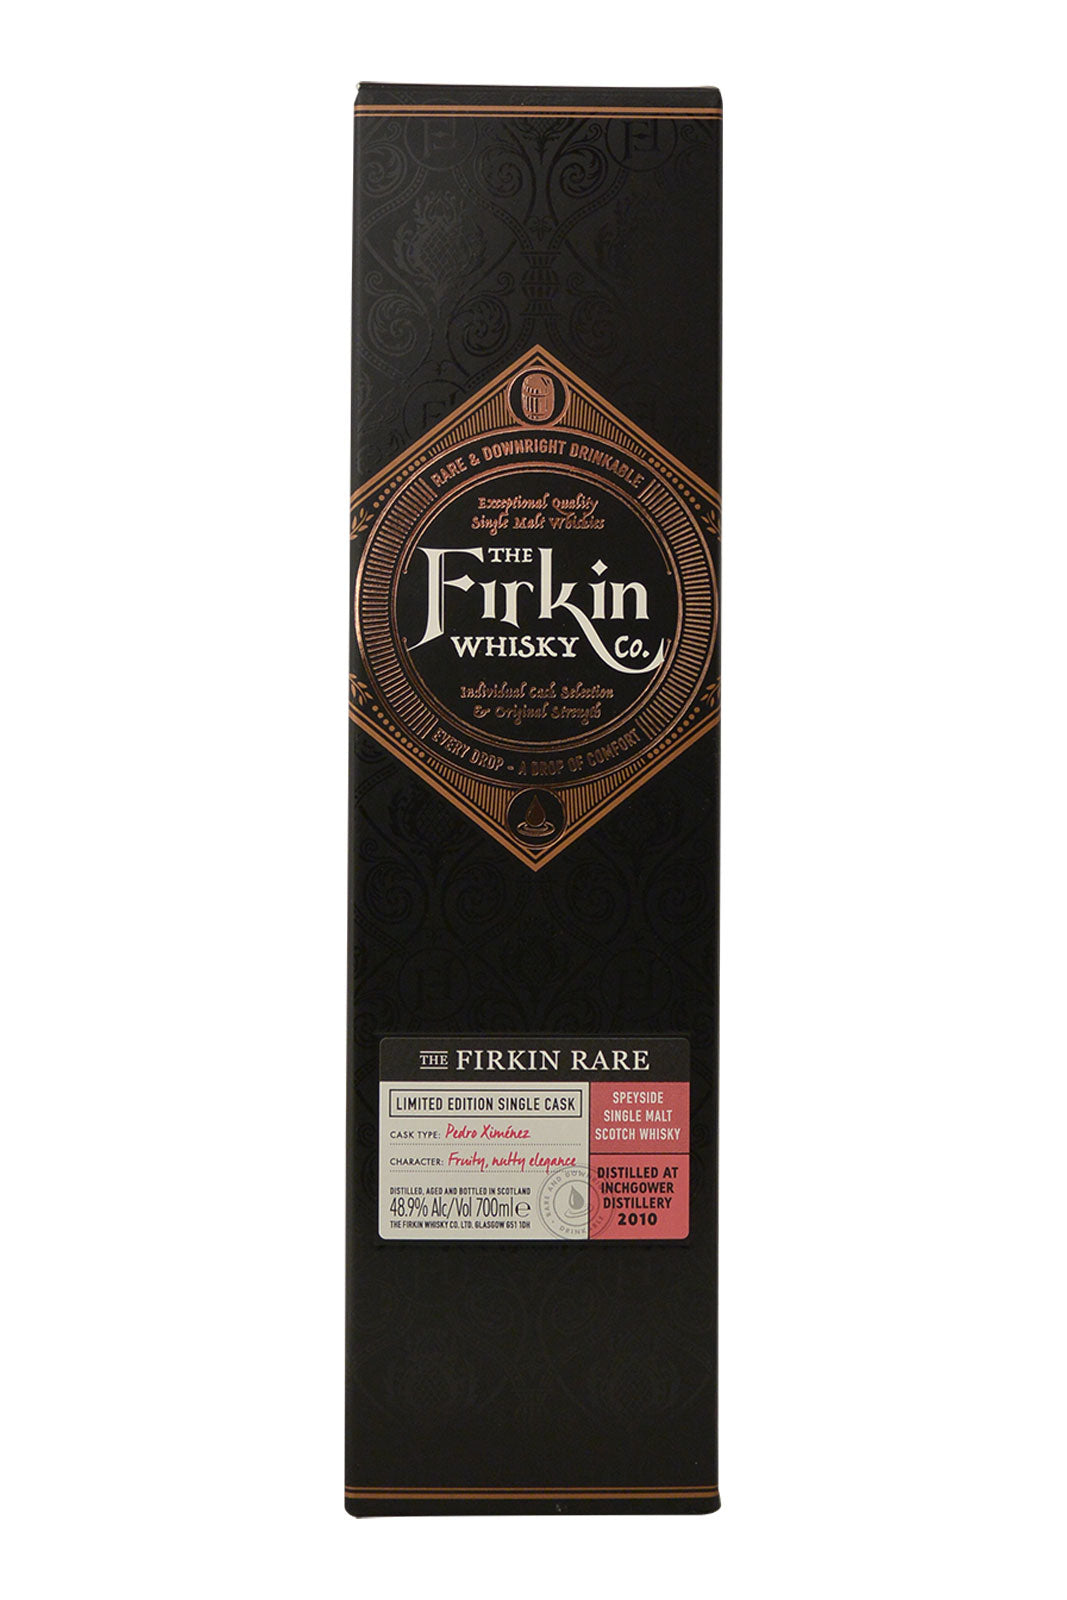 Firkin Rare Inchgower 2010 Single Cask PX Finish